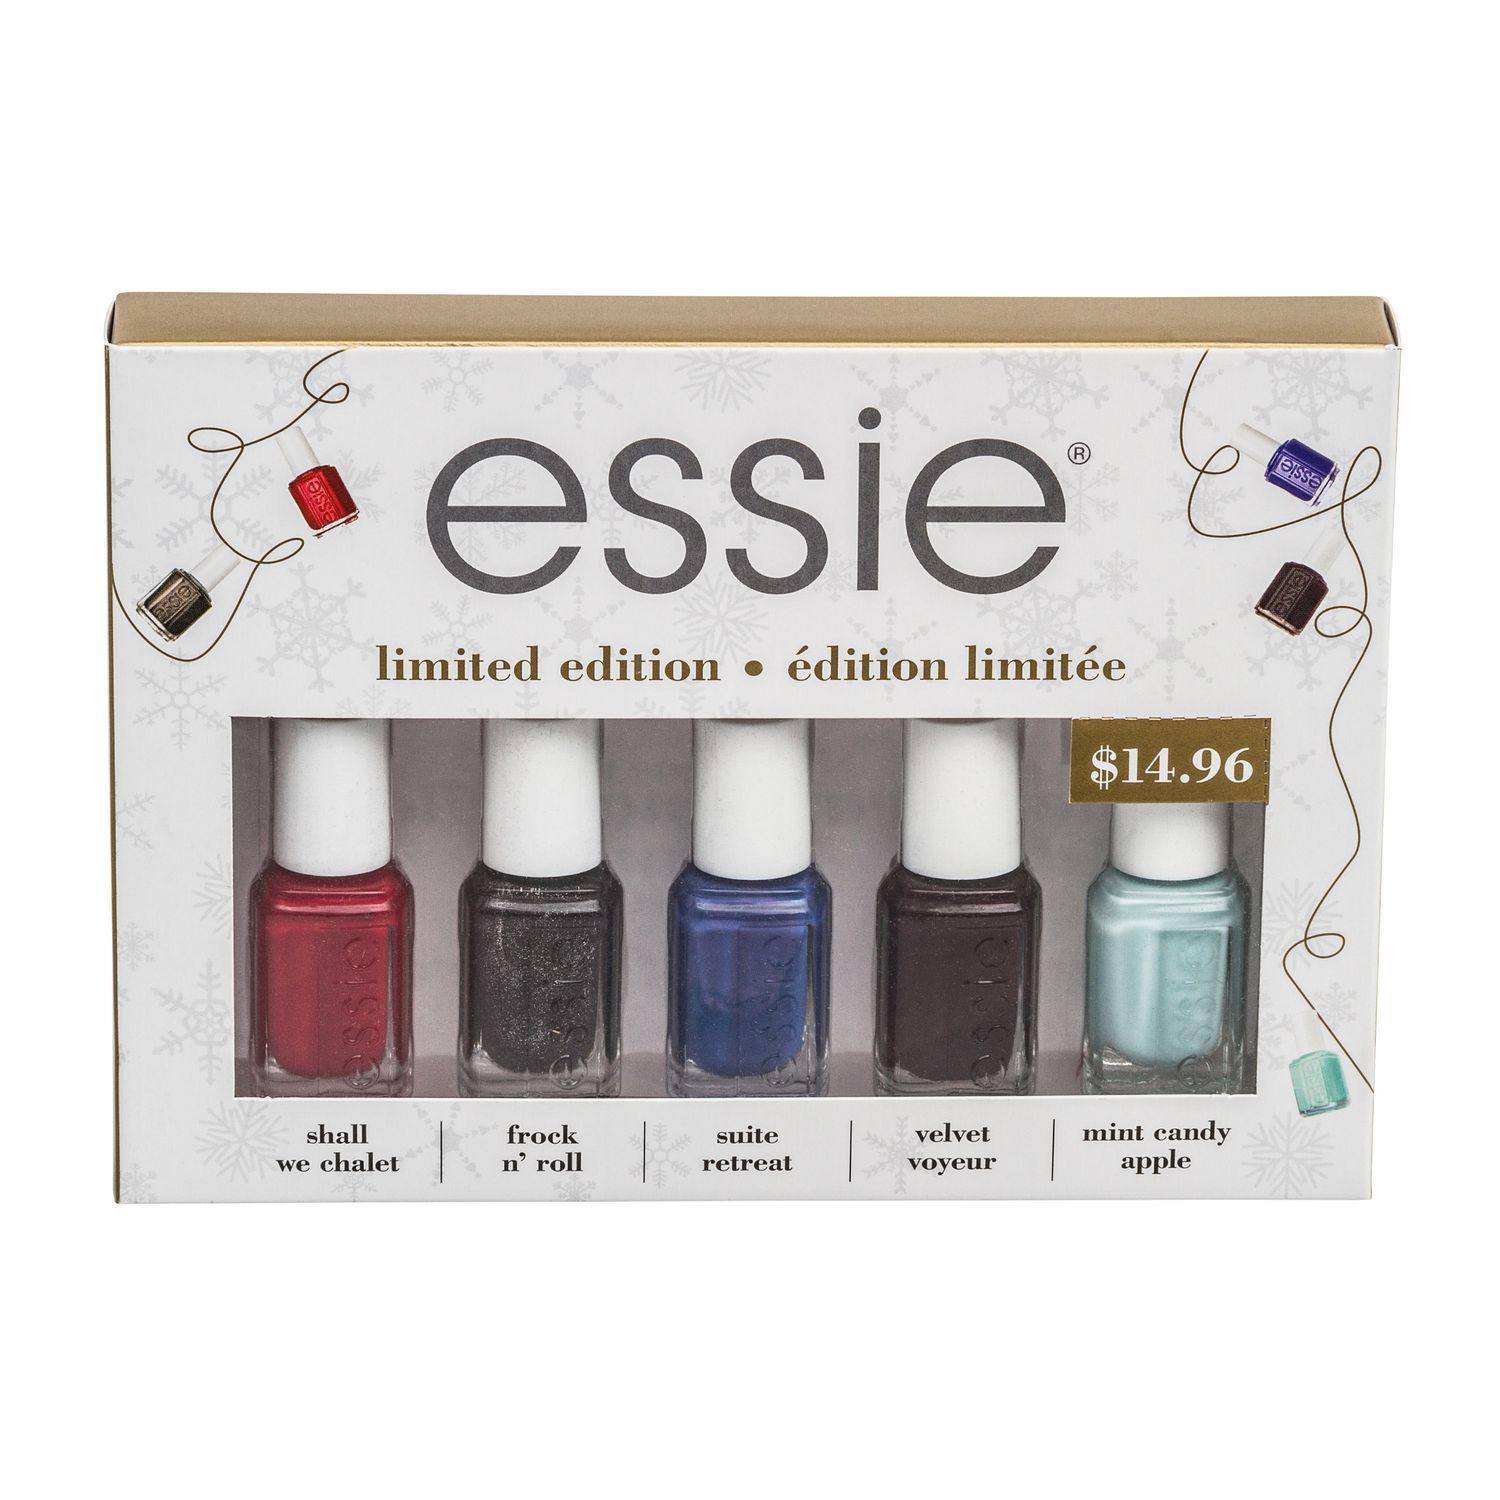 Essie Holiday Kit Walmart Canada